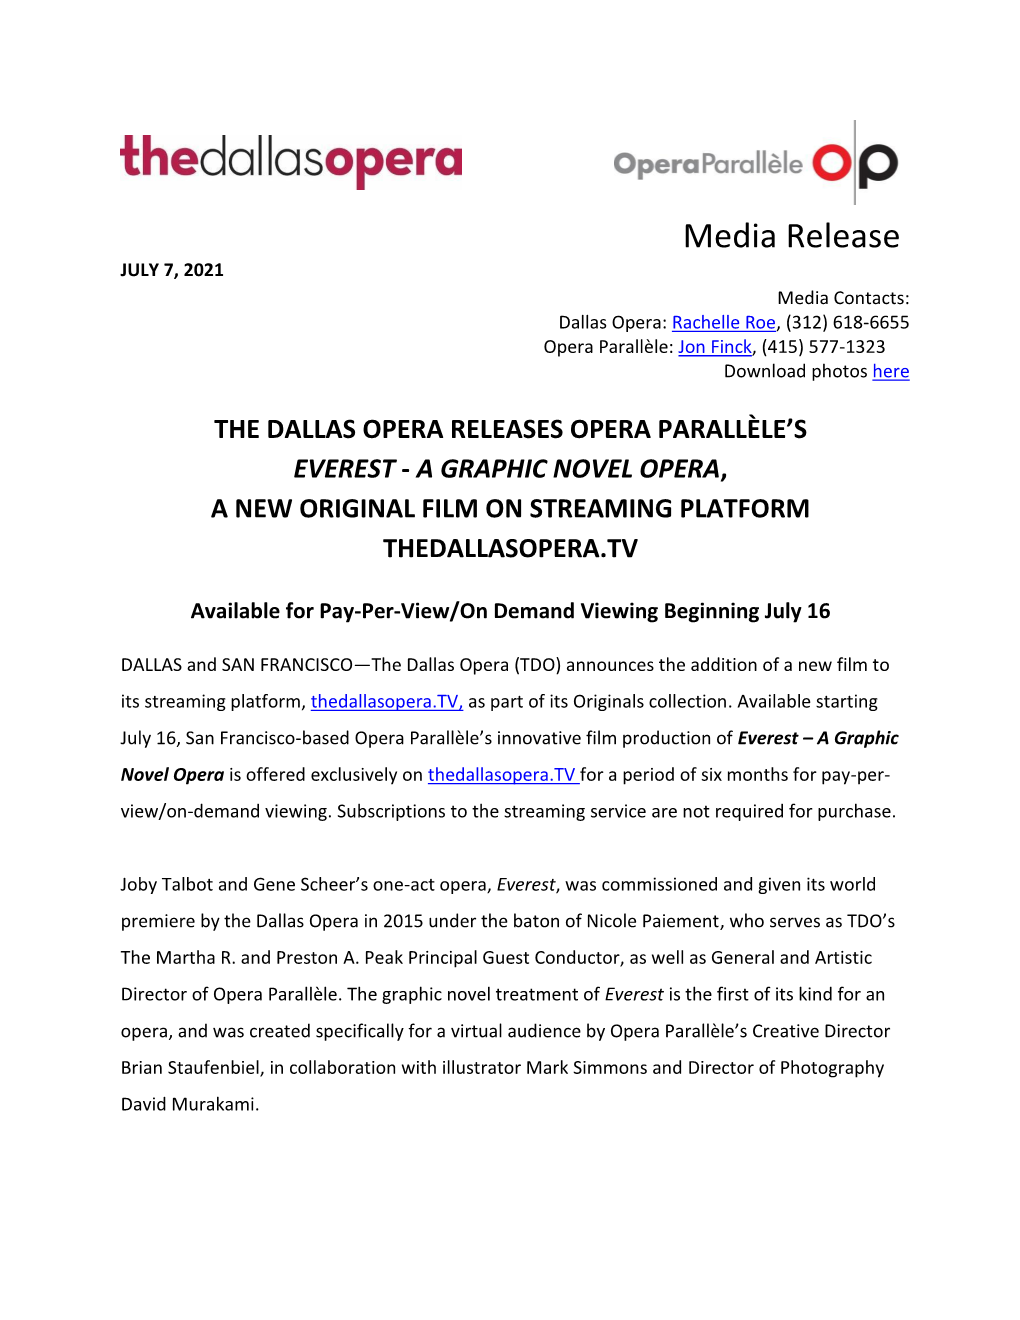 A Graphic Novel Opera, a New Original Film on Streaming Platform Thedallasopera.Tv